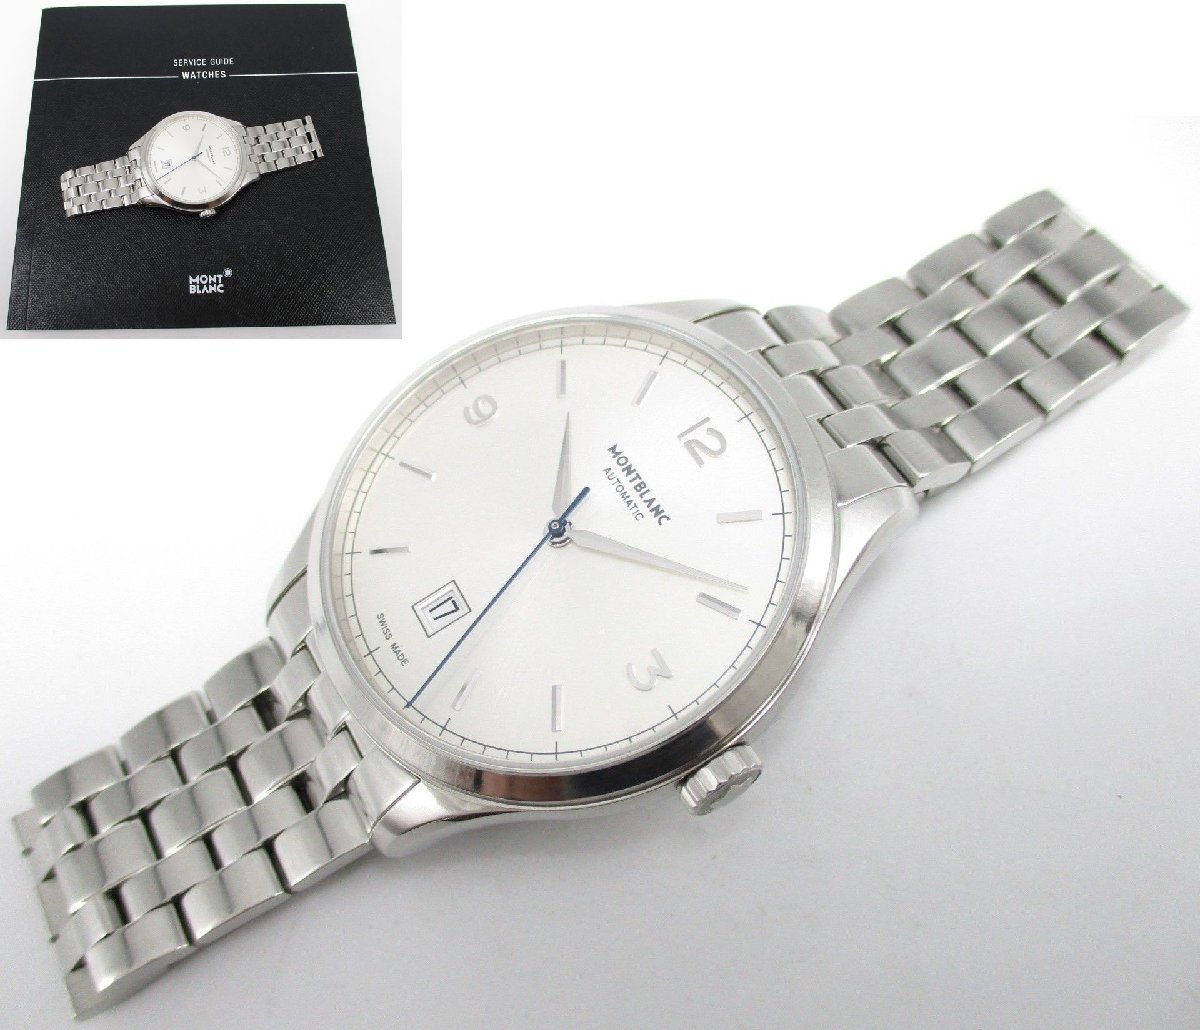 # Montblanc # ultimate beautiful # worn Tey ji Chrono meto Lee 112532# men's self-winding watch wristwatch 